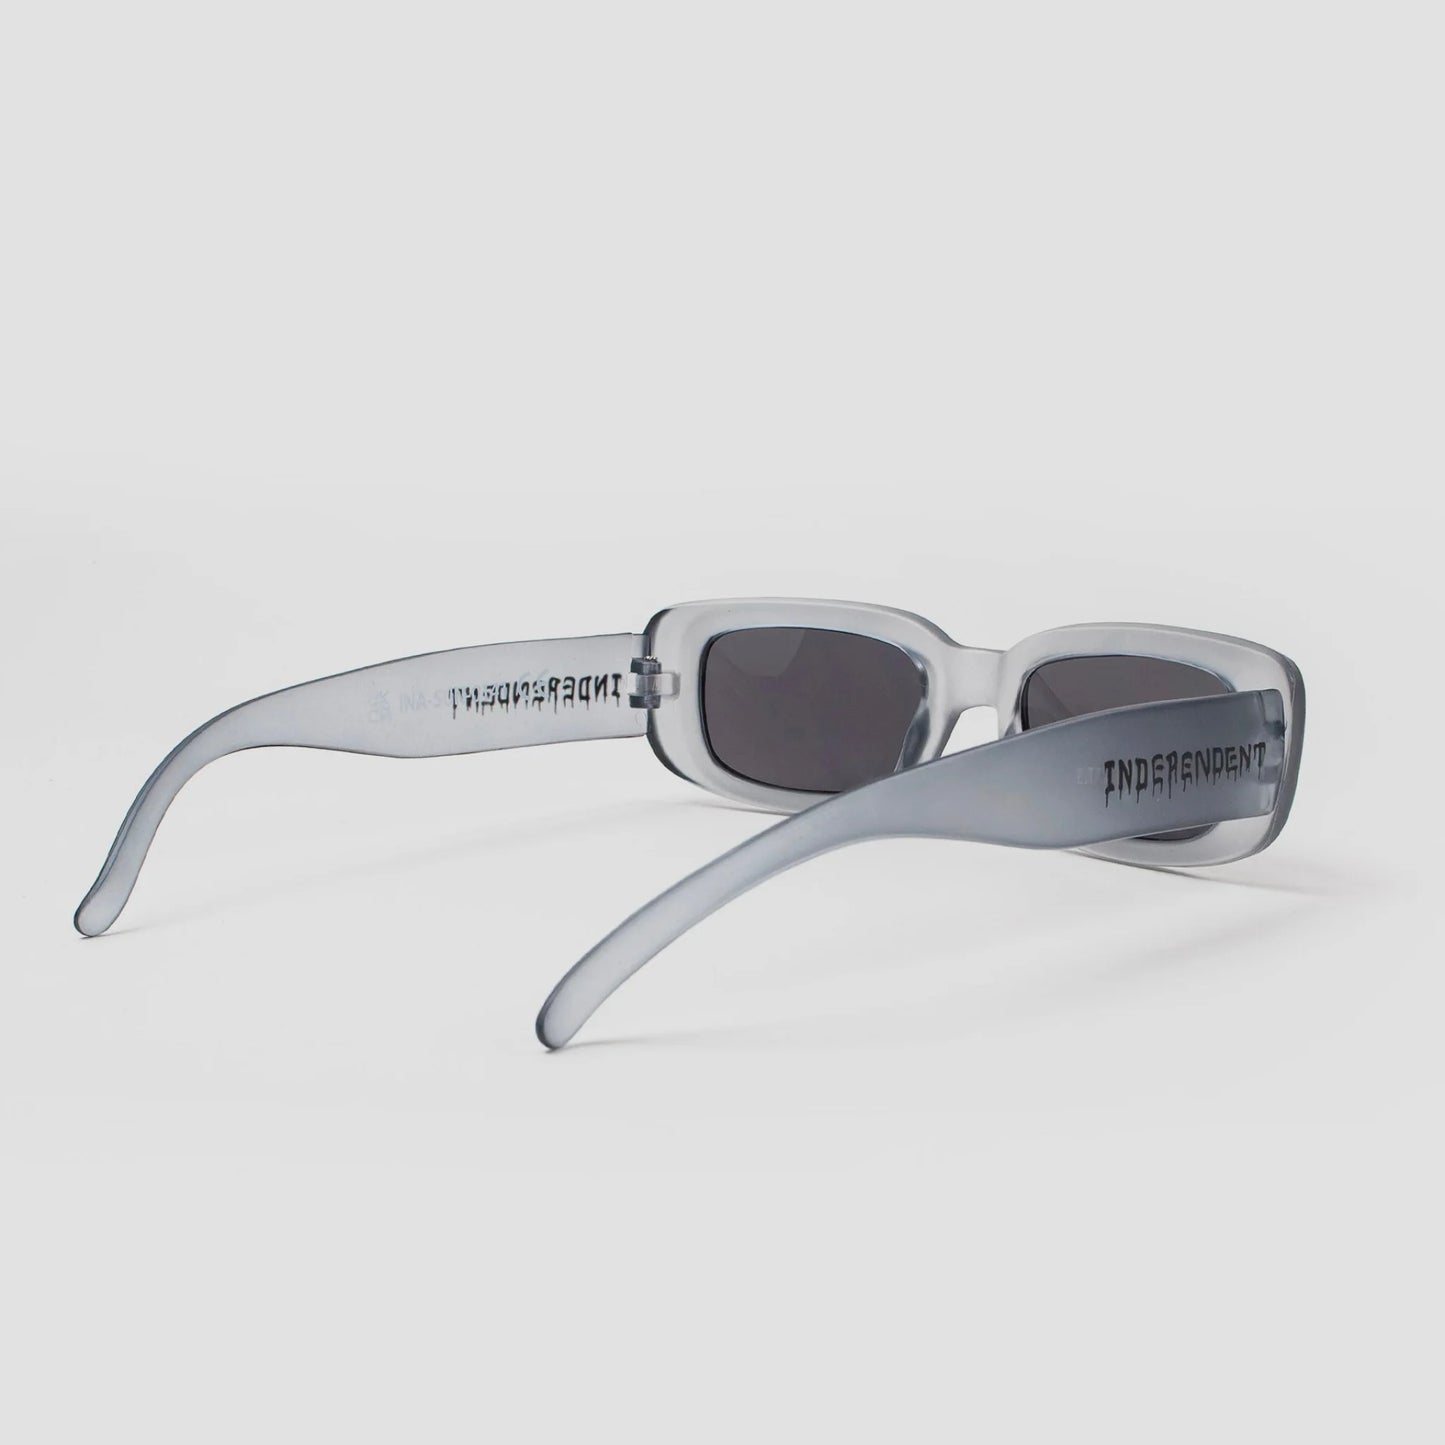 Independent Vandal Sunglasses - Cement - Prime Delux Store